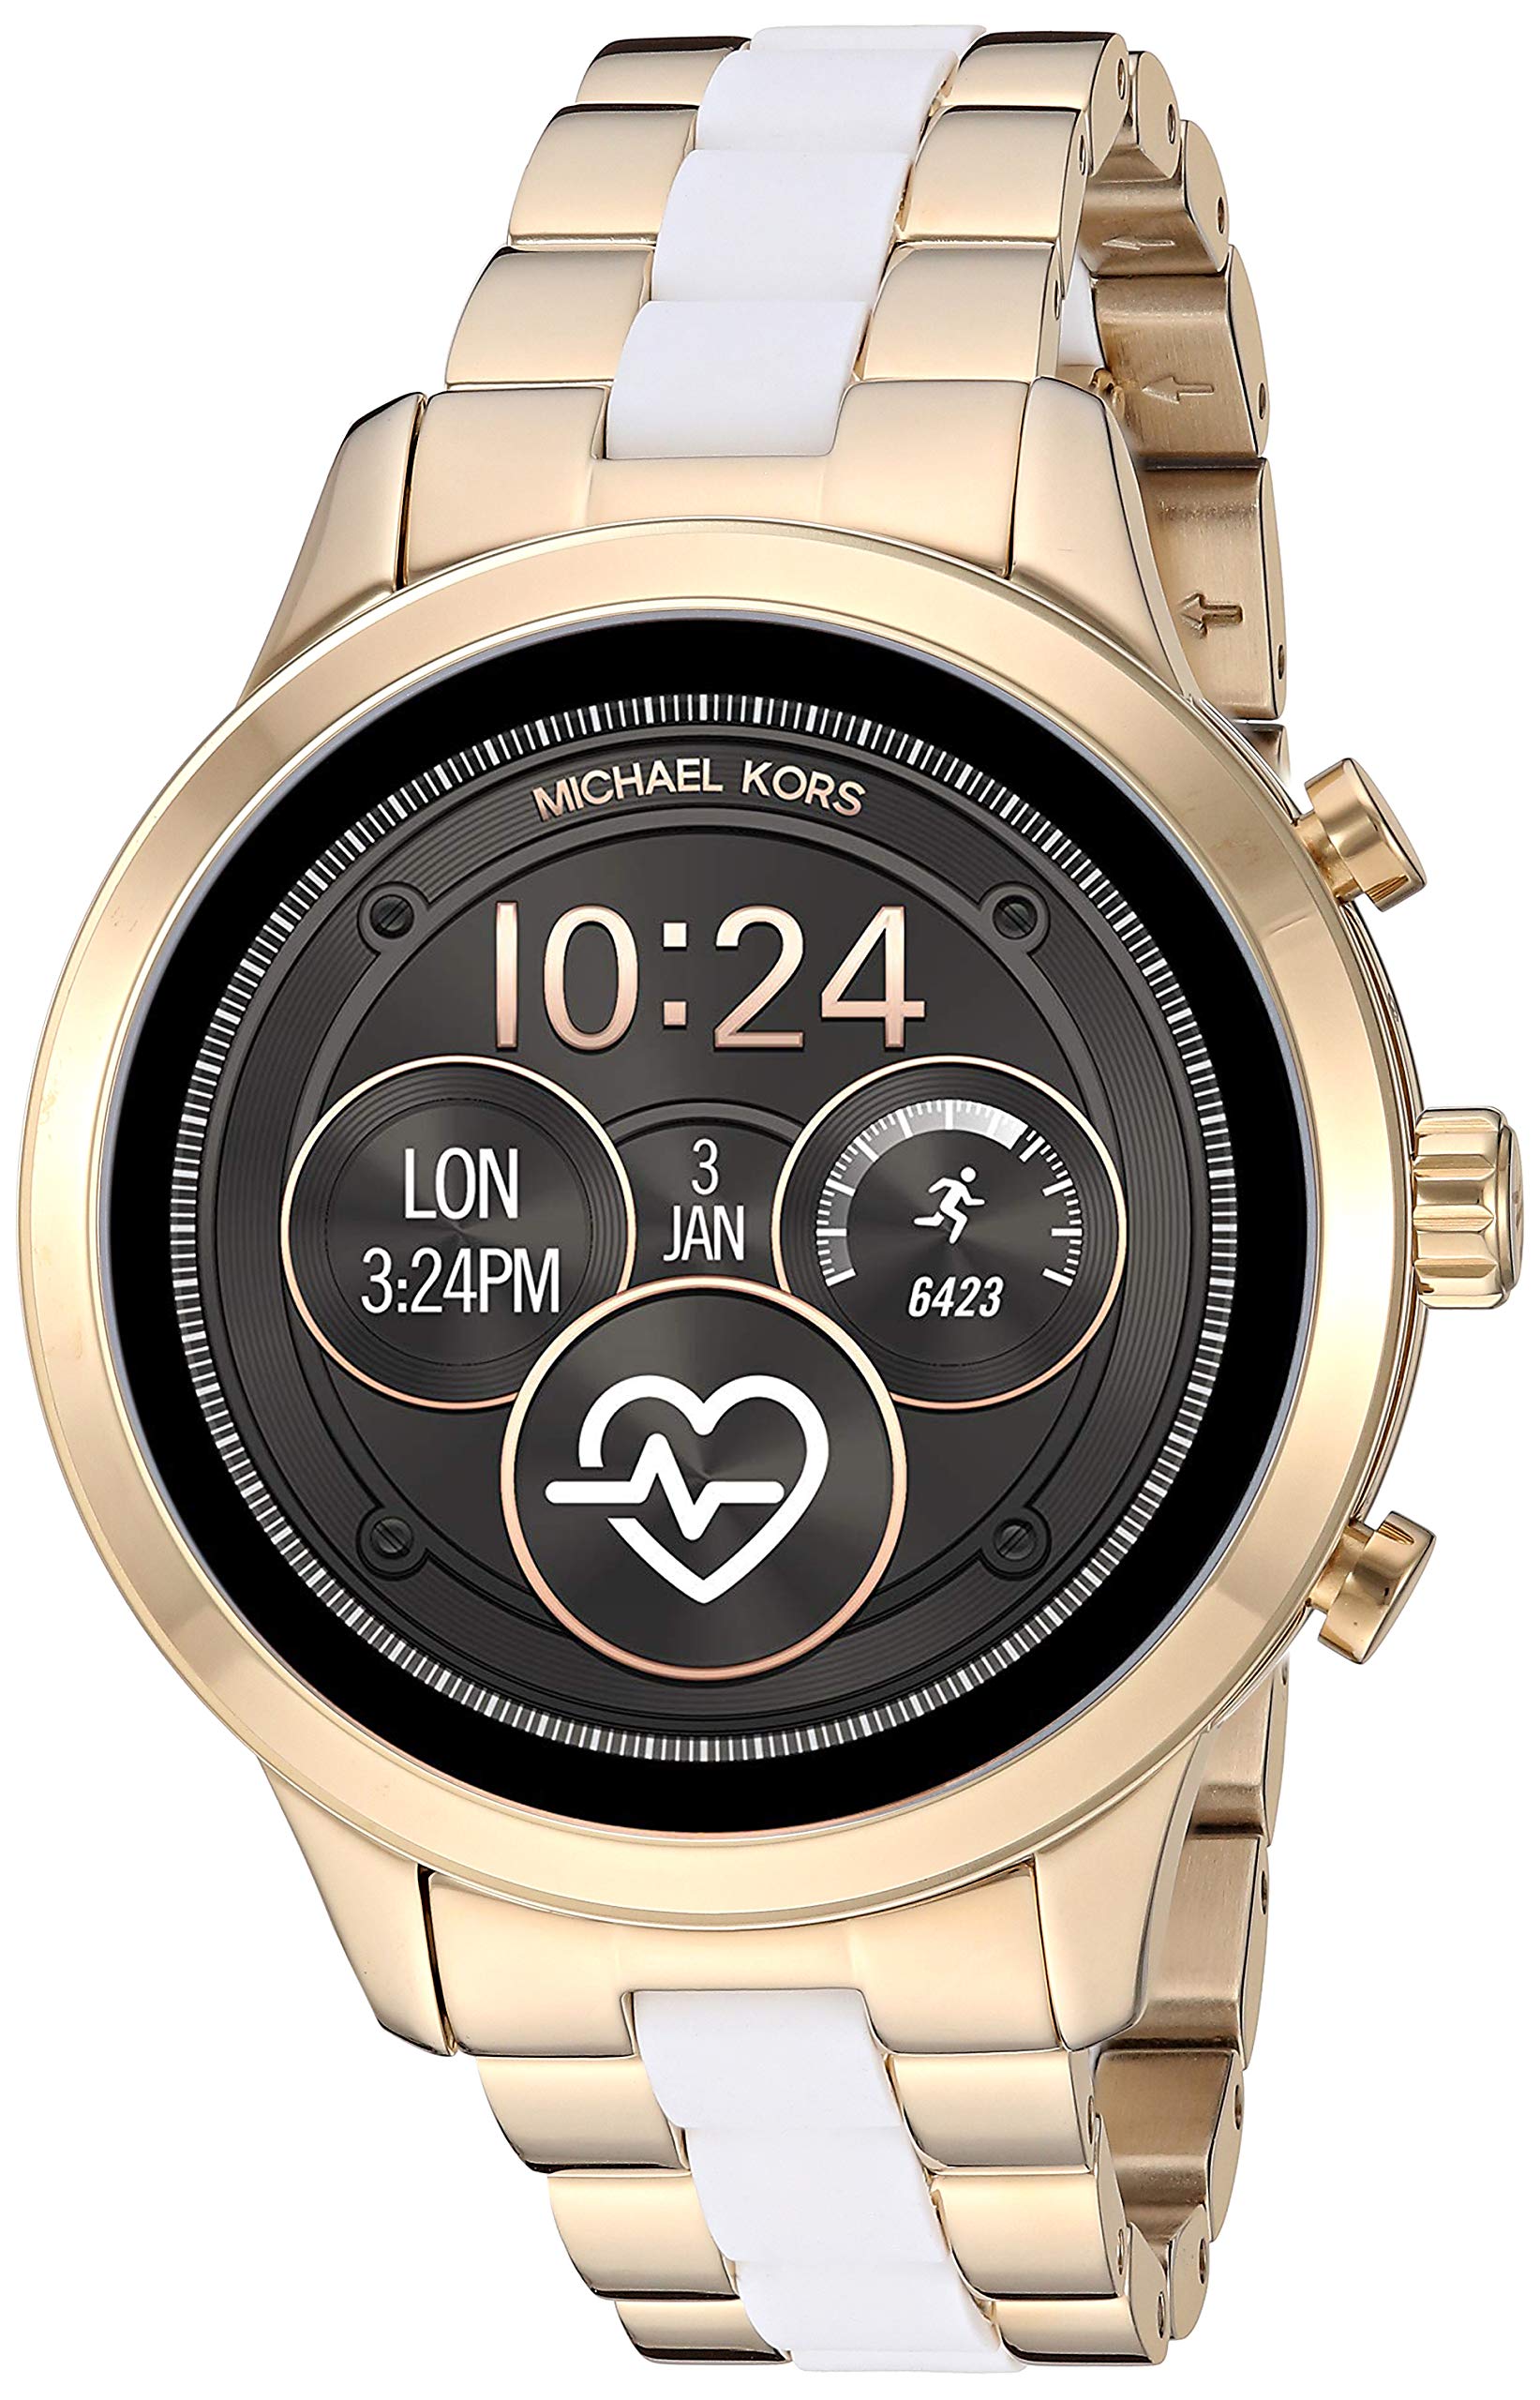 Chi tiết 54 về đồng hồ michael kors smartwatch nữ hay nhất   cdgdbentreeduvn